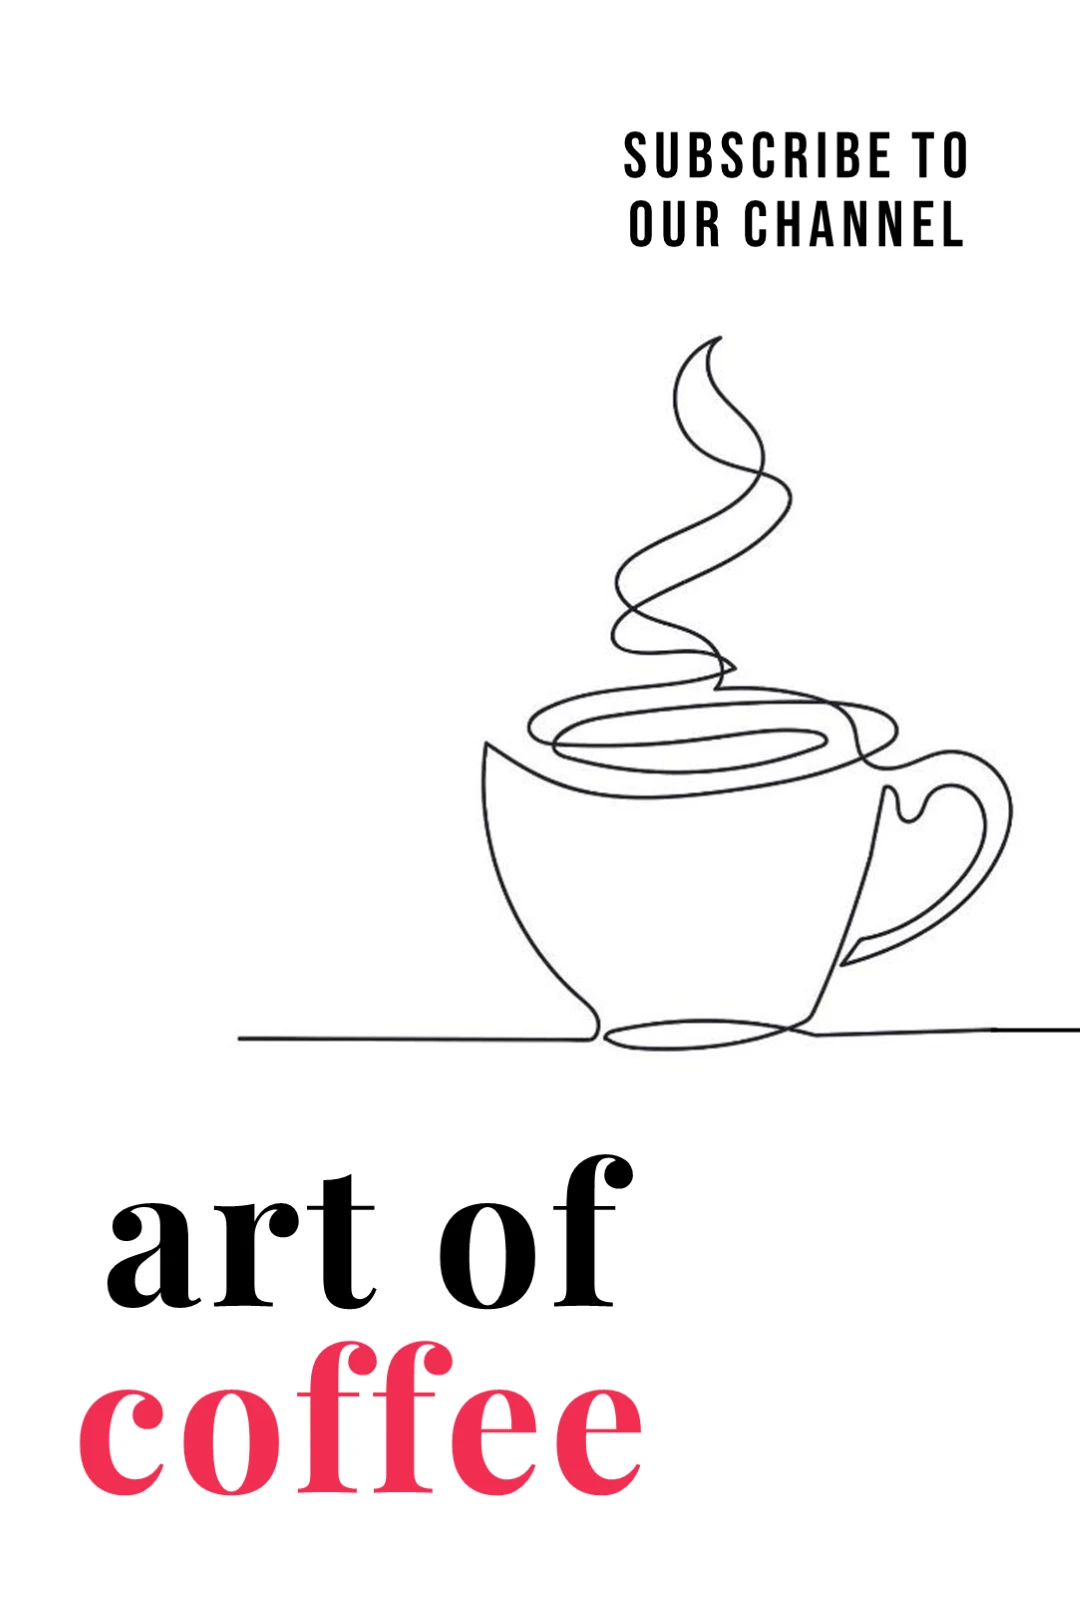 Art of coffee